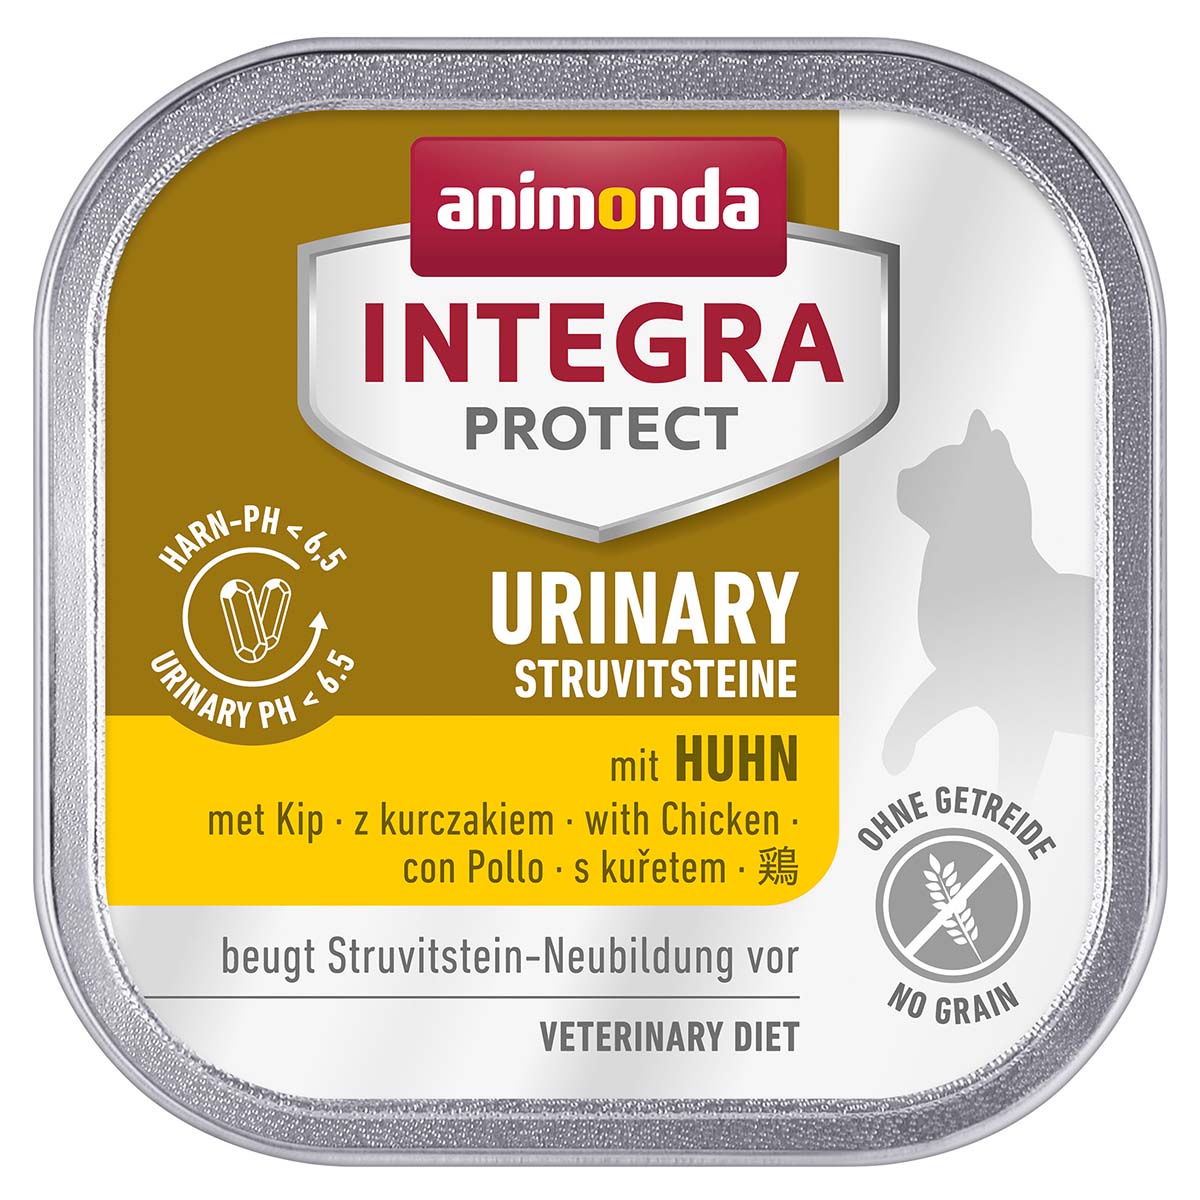 animonda INTEGRA PROTECT Adult Urinary Struvitstein mit Huhn 16x100g von animonda Integra Protect